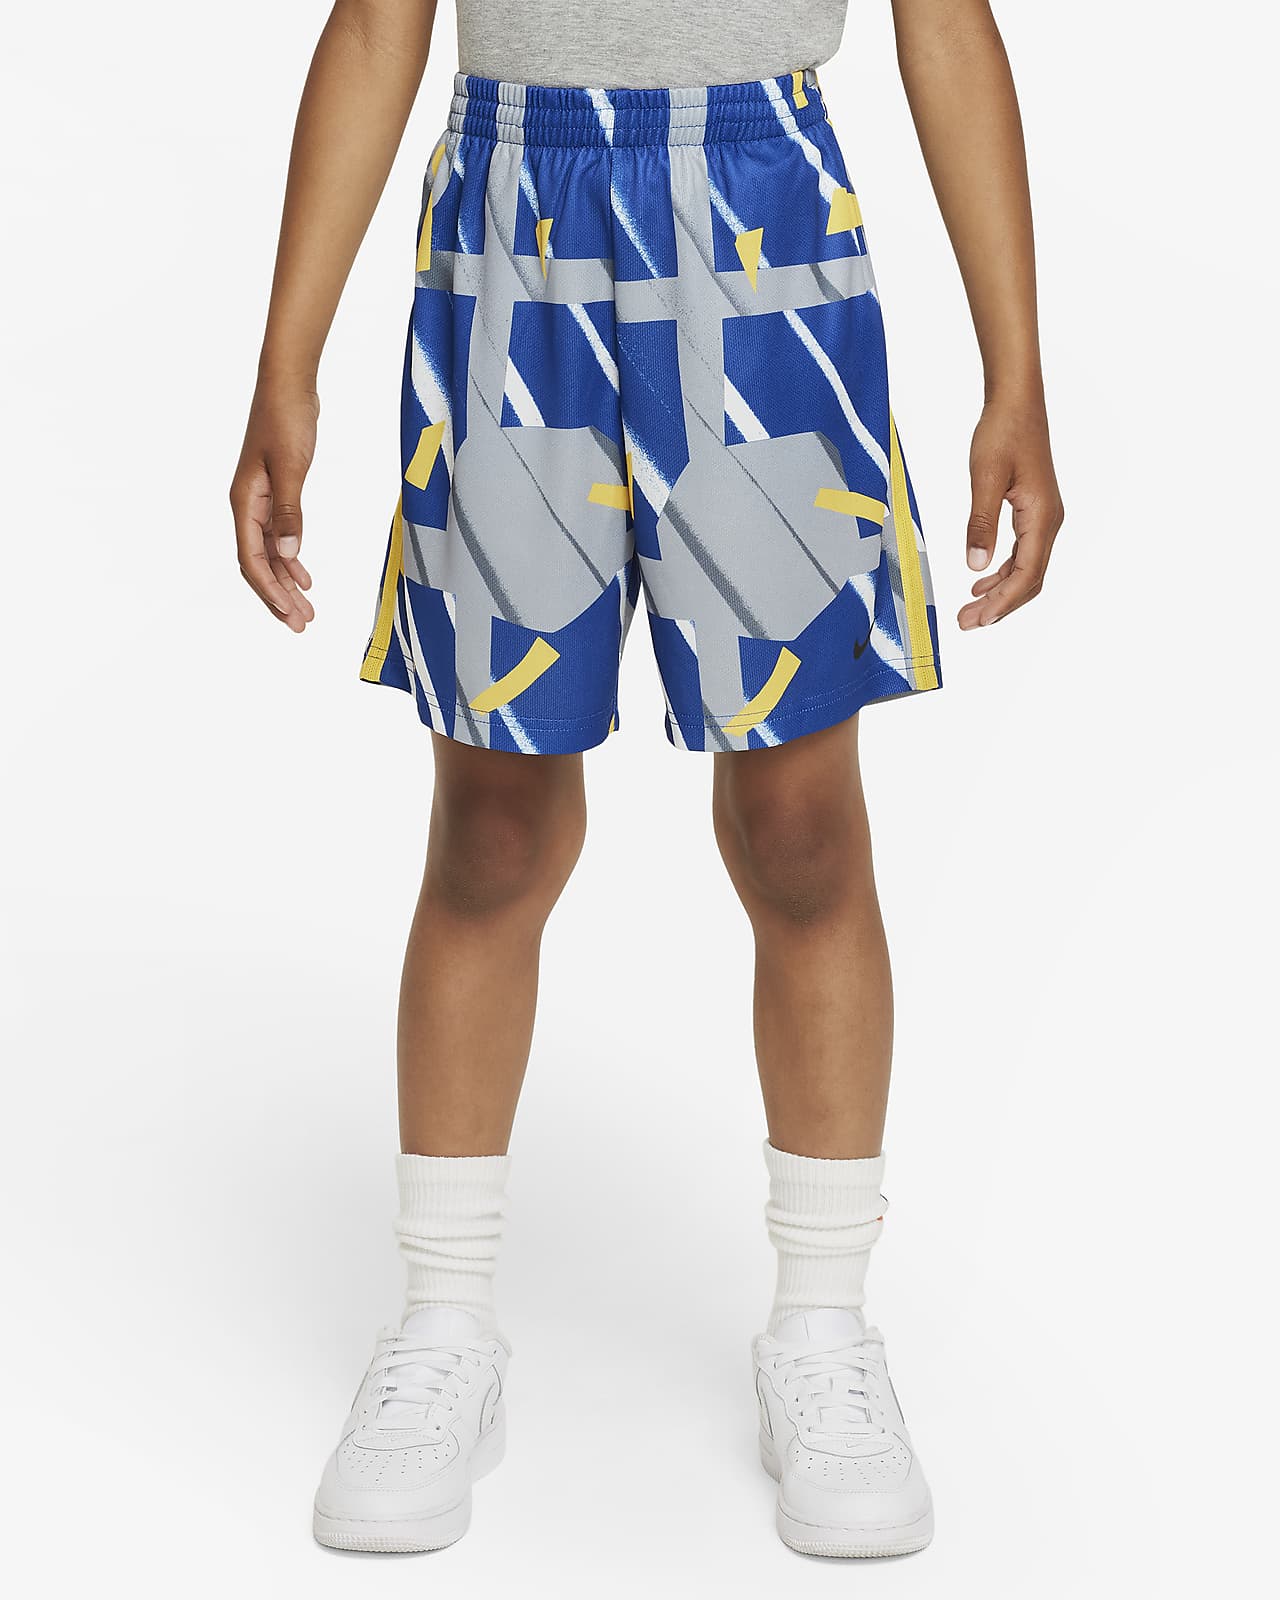 Nike Dri-FIT "All Day Play" Printed Shorts Little Kids Dri-FIT Shorts